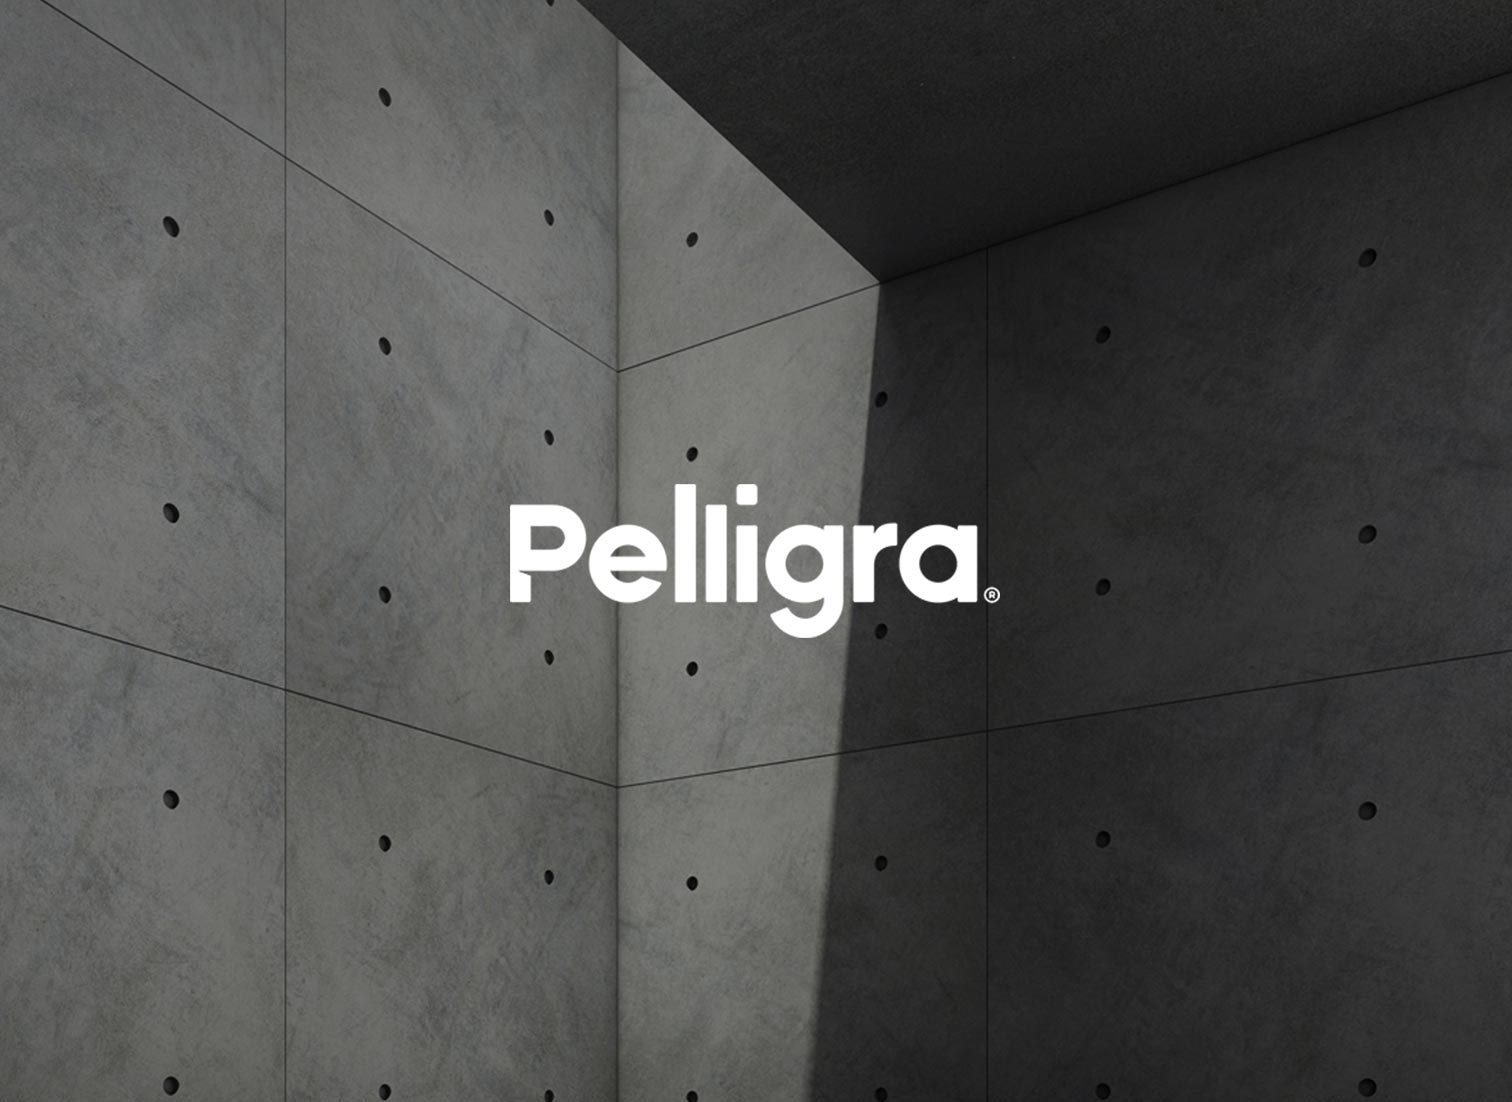 Pelligra Offices - Coming Soon